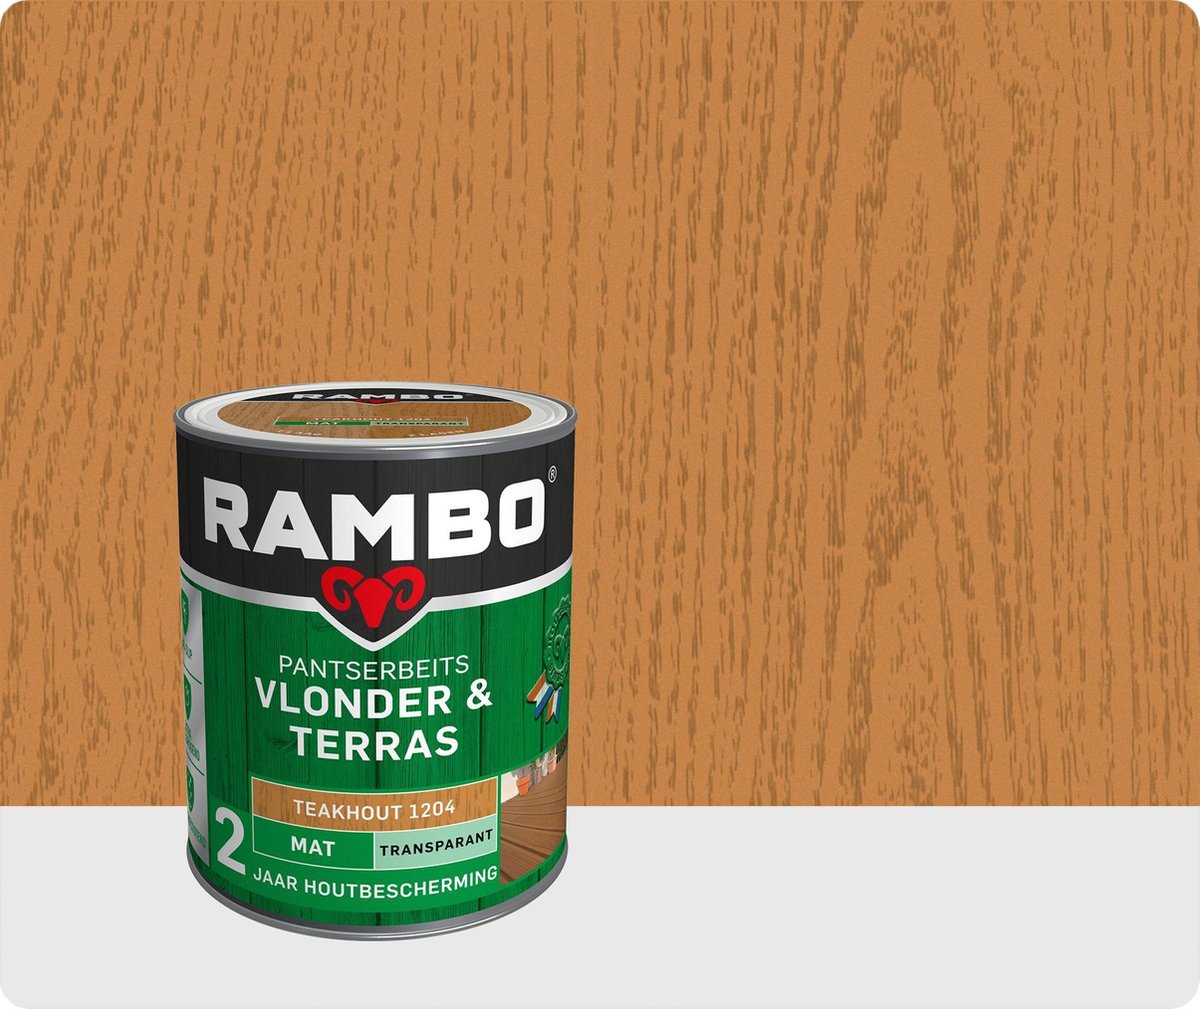 Rambo Vlonder & Terras pantserbeits mat transparant teakhout 1204 1 l |  bol.com